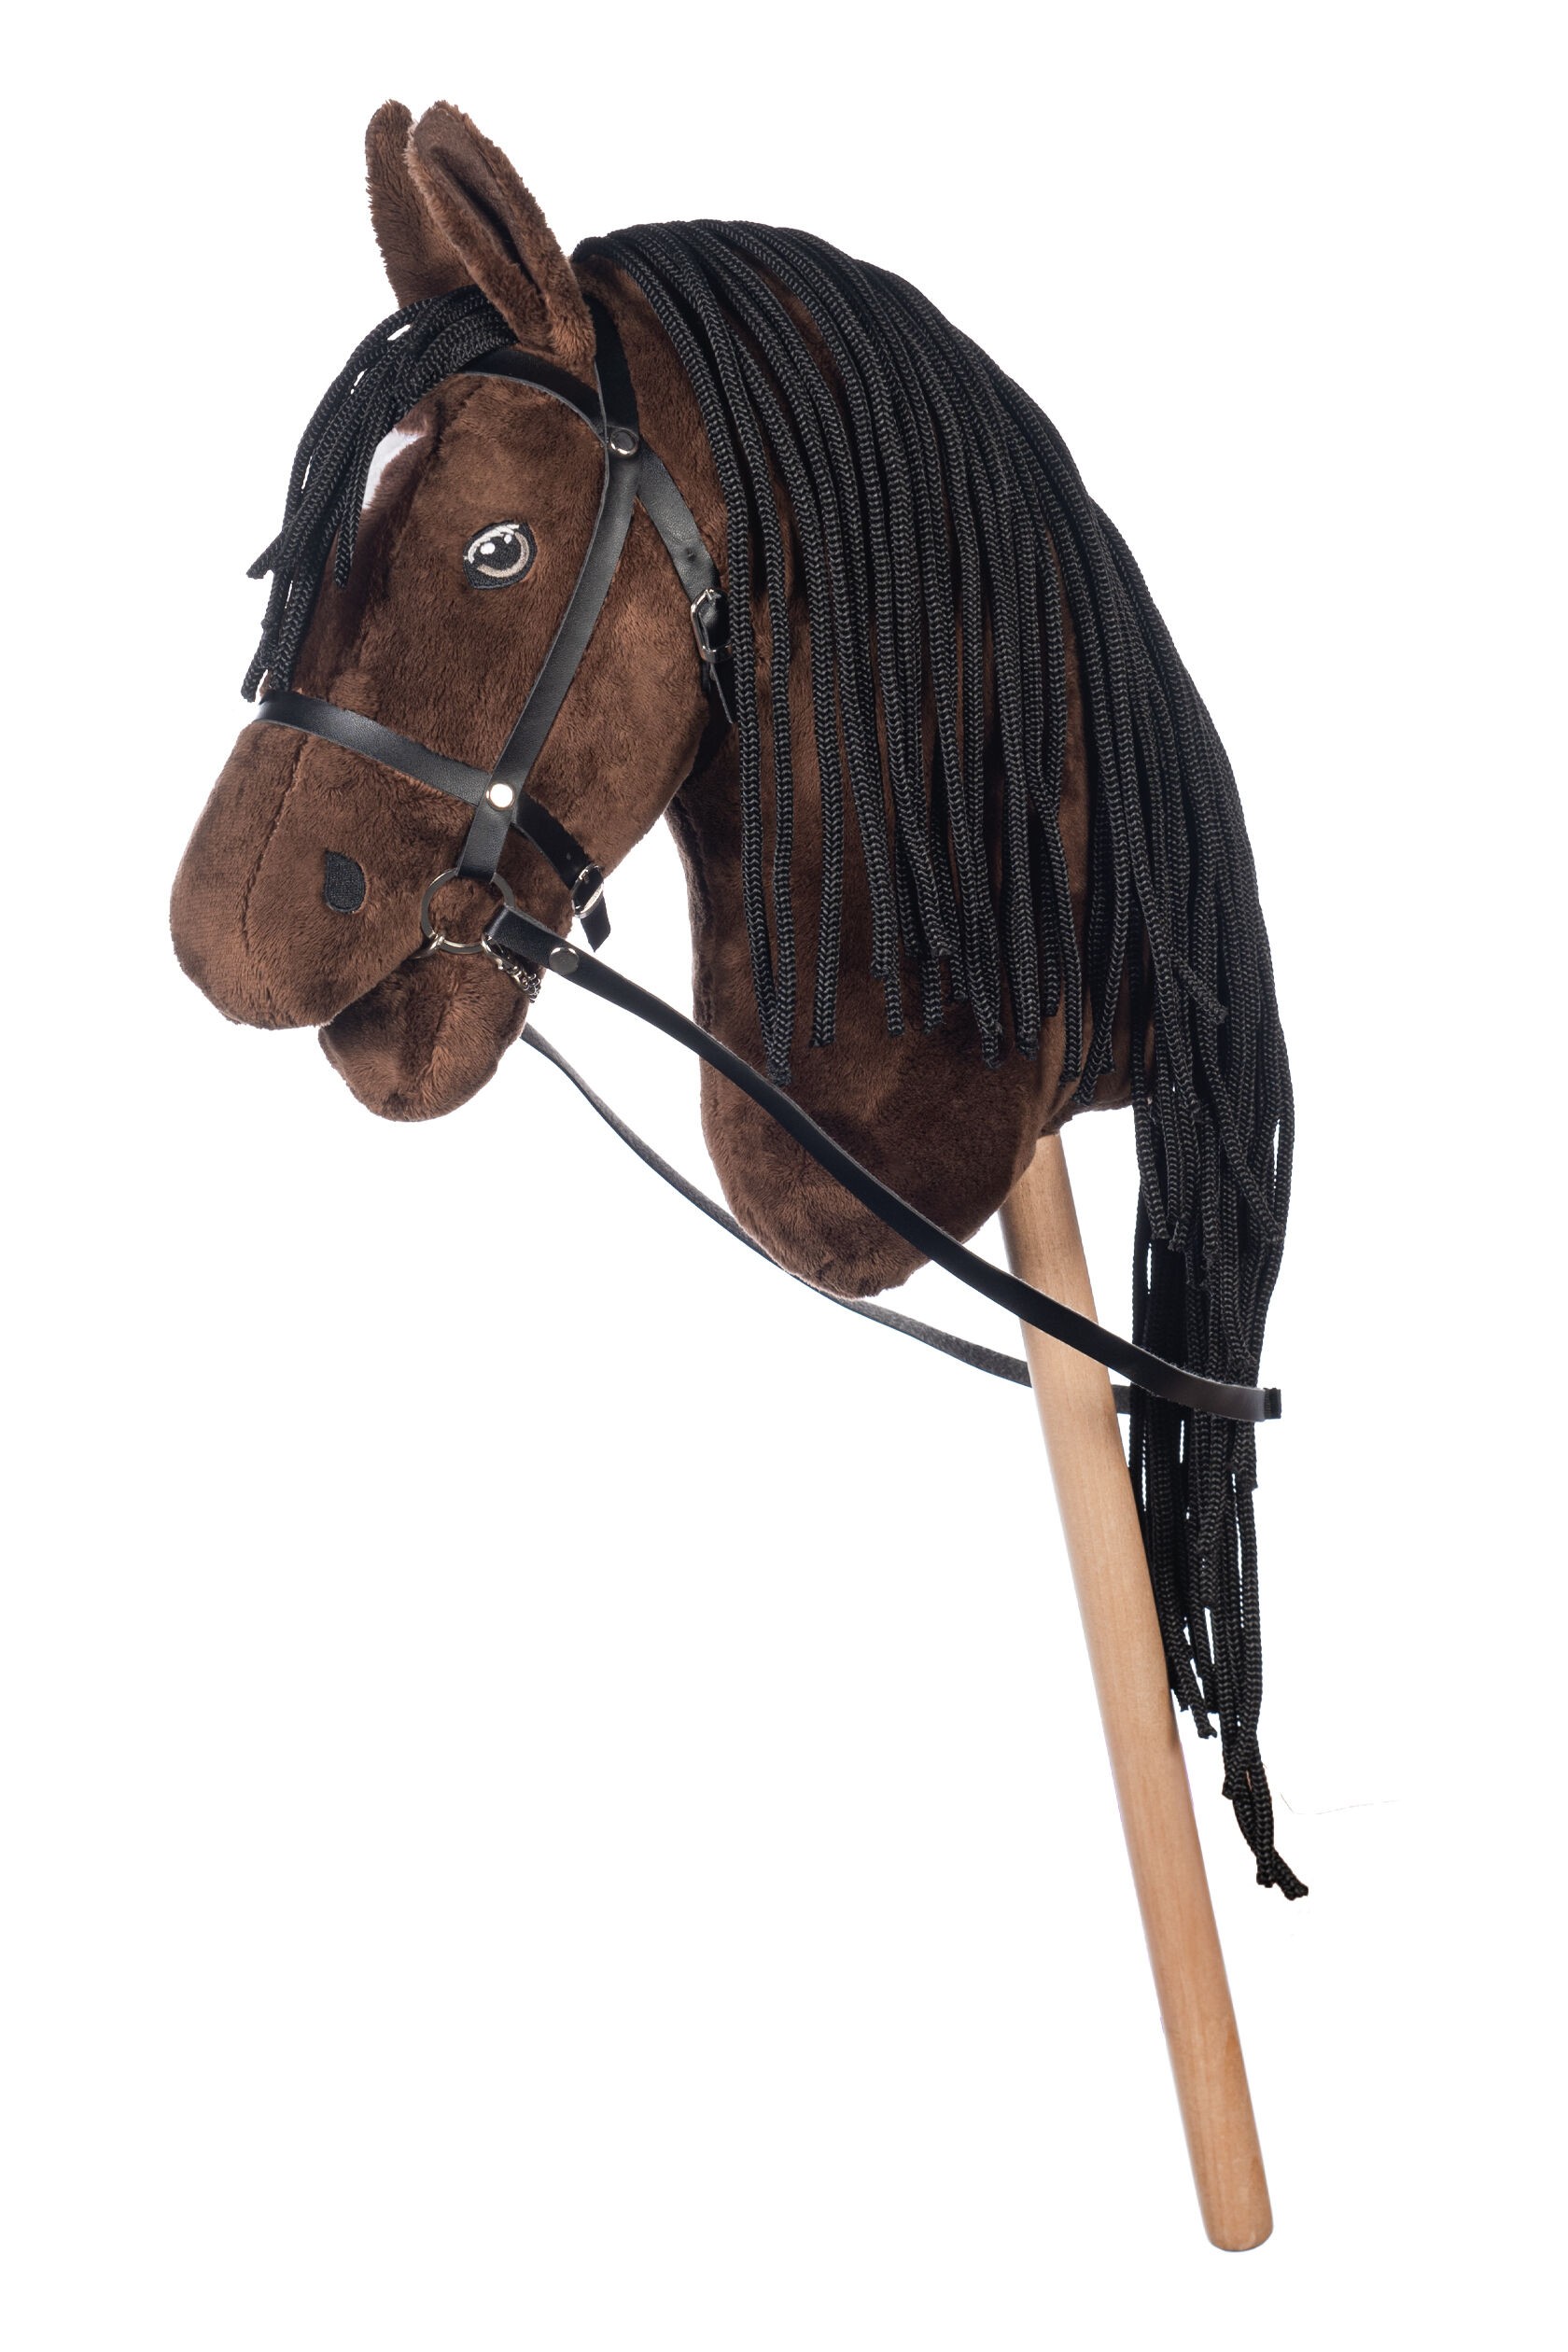 HKM Hobby Horse Steckenpferd - braun - Stück - 2